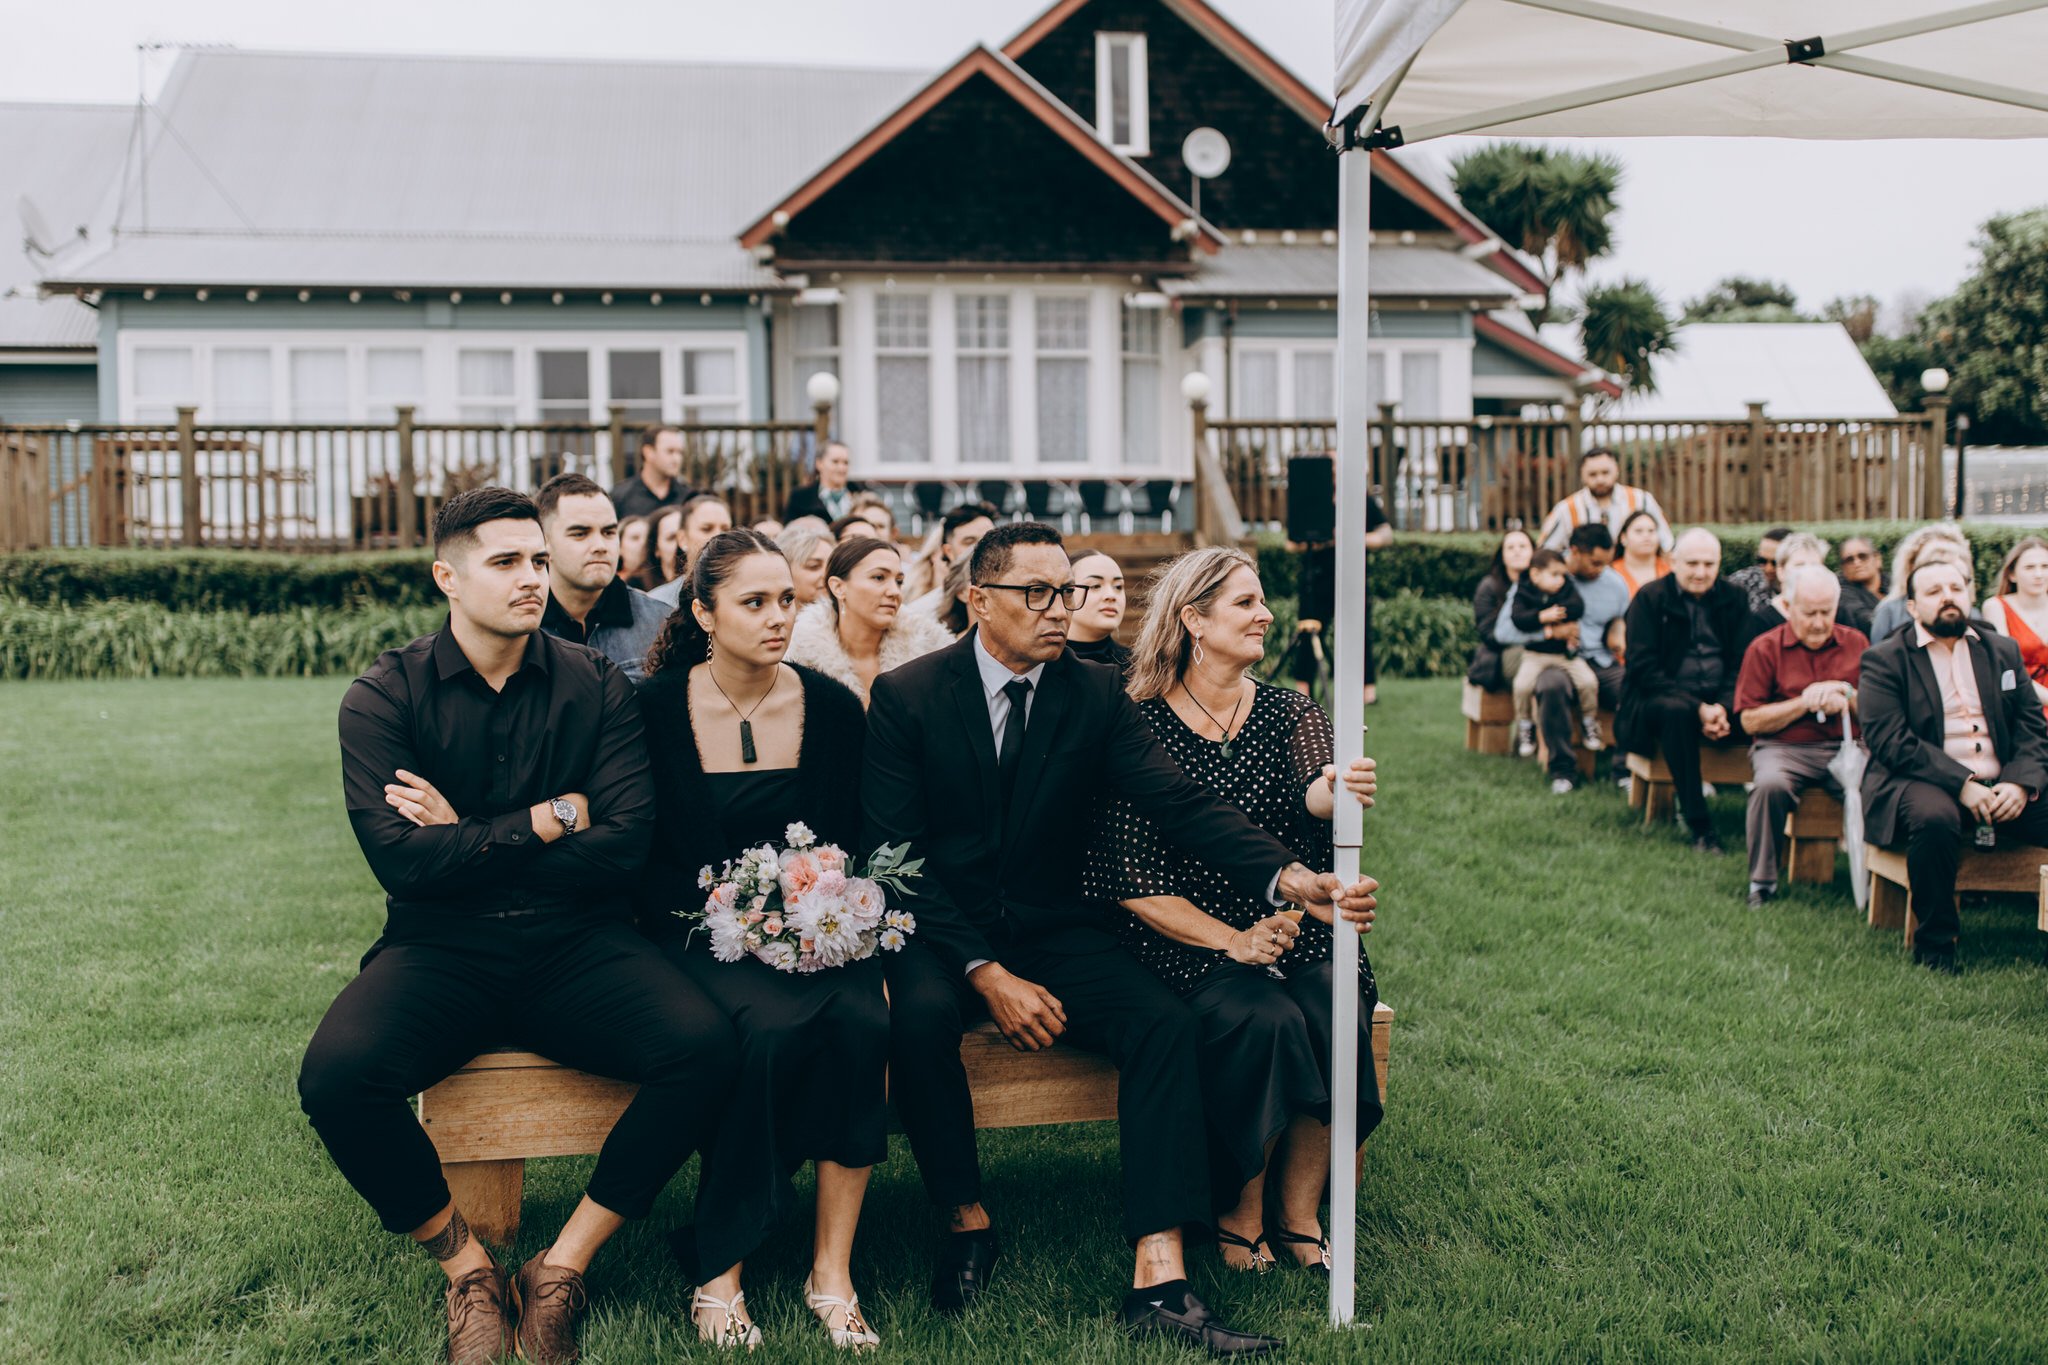 Connemara Country lodge Auckland wedding 38.jpg